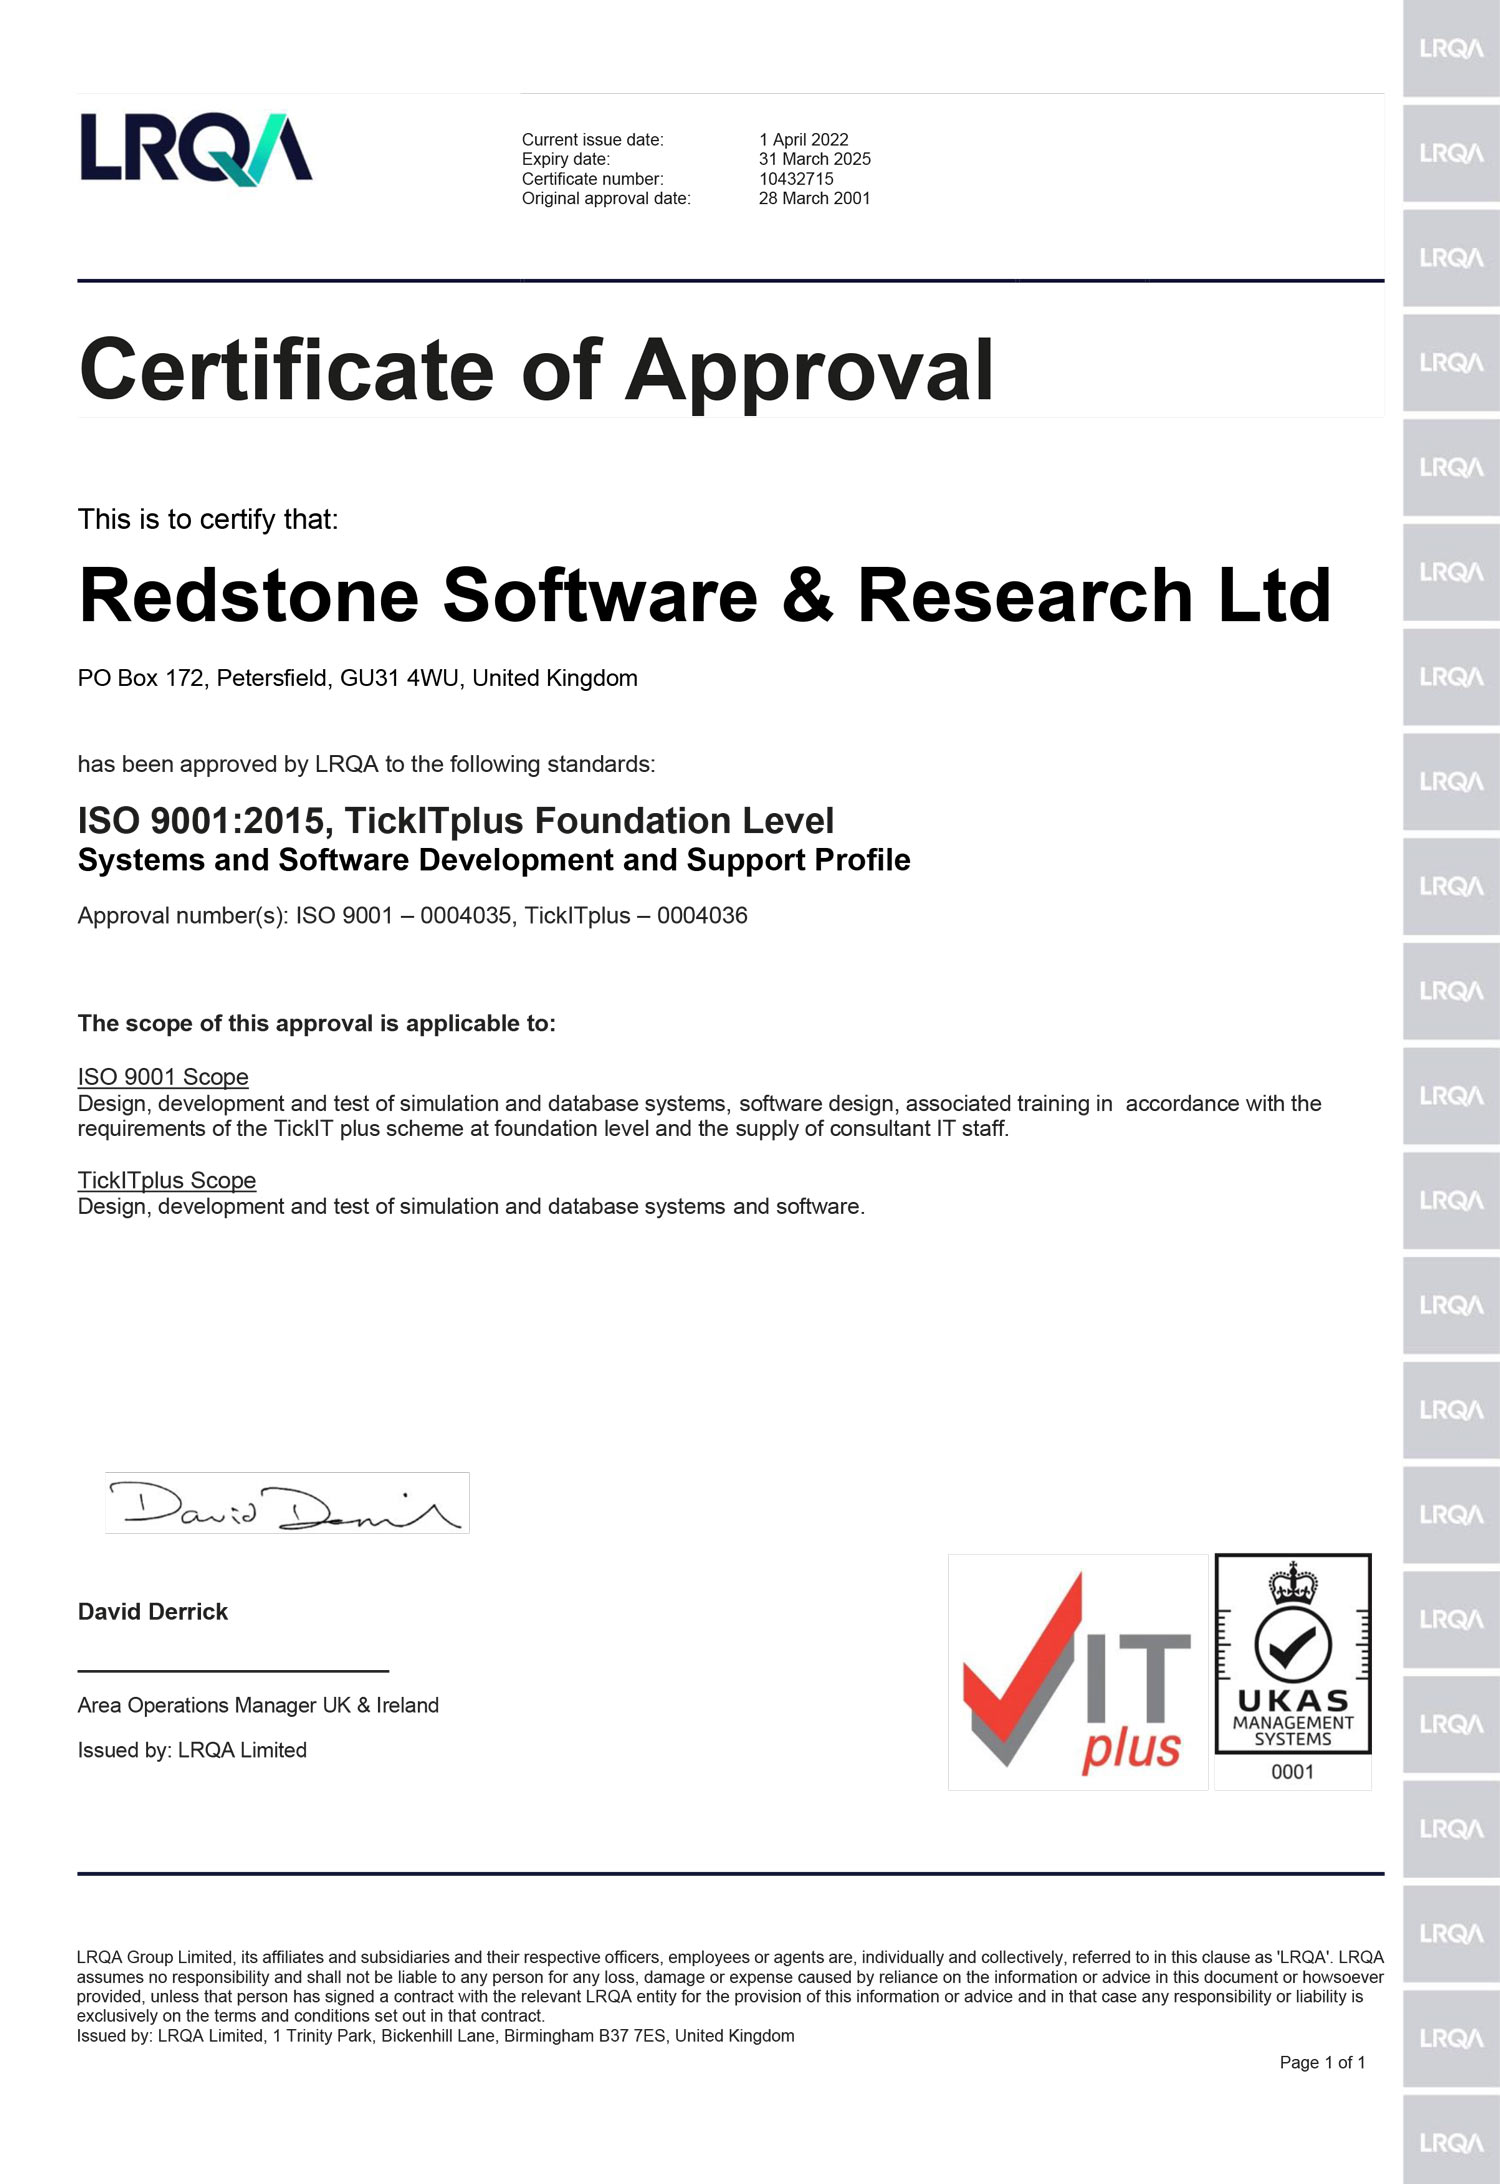 Redstone's ISO 9001 certificate